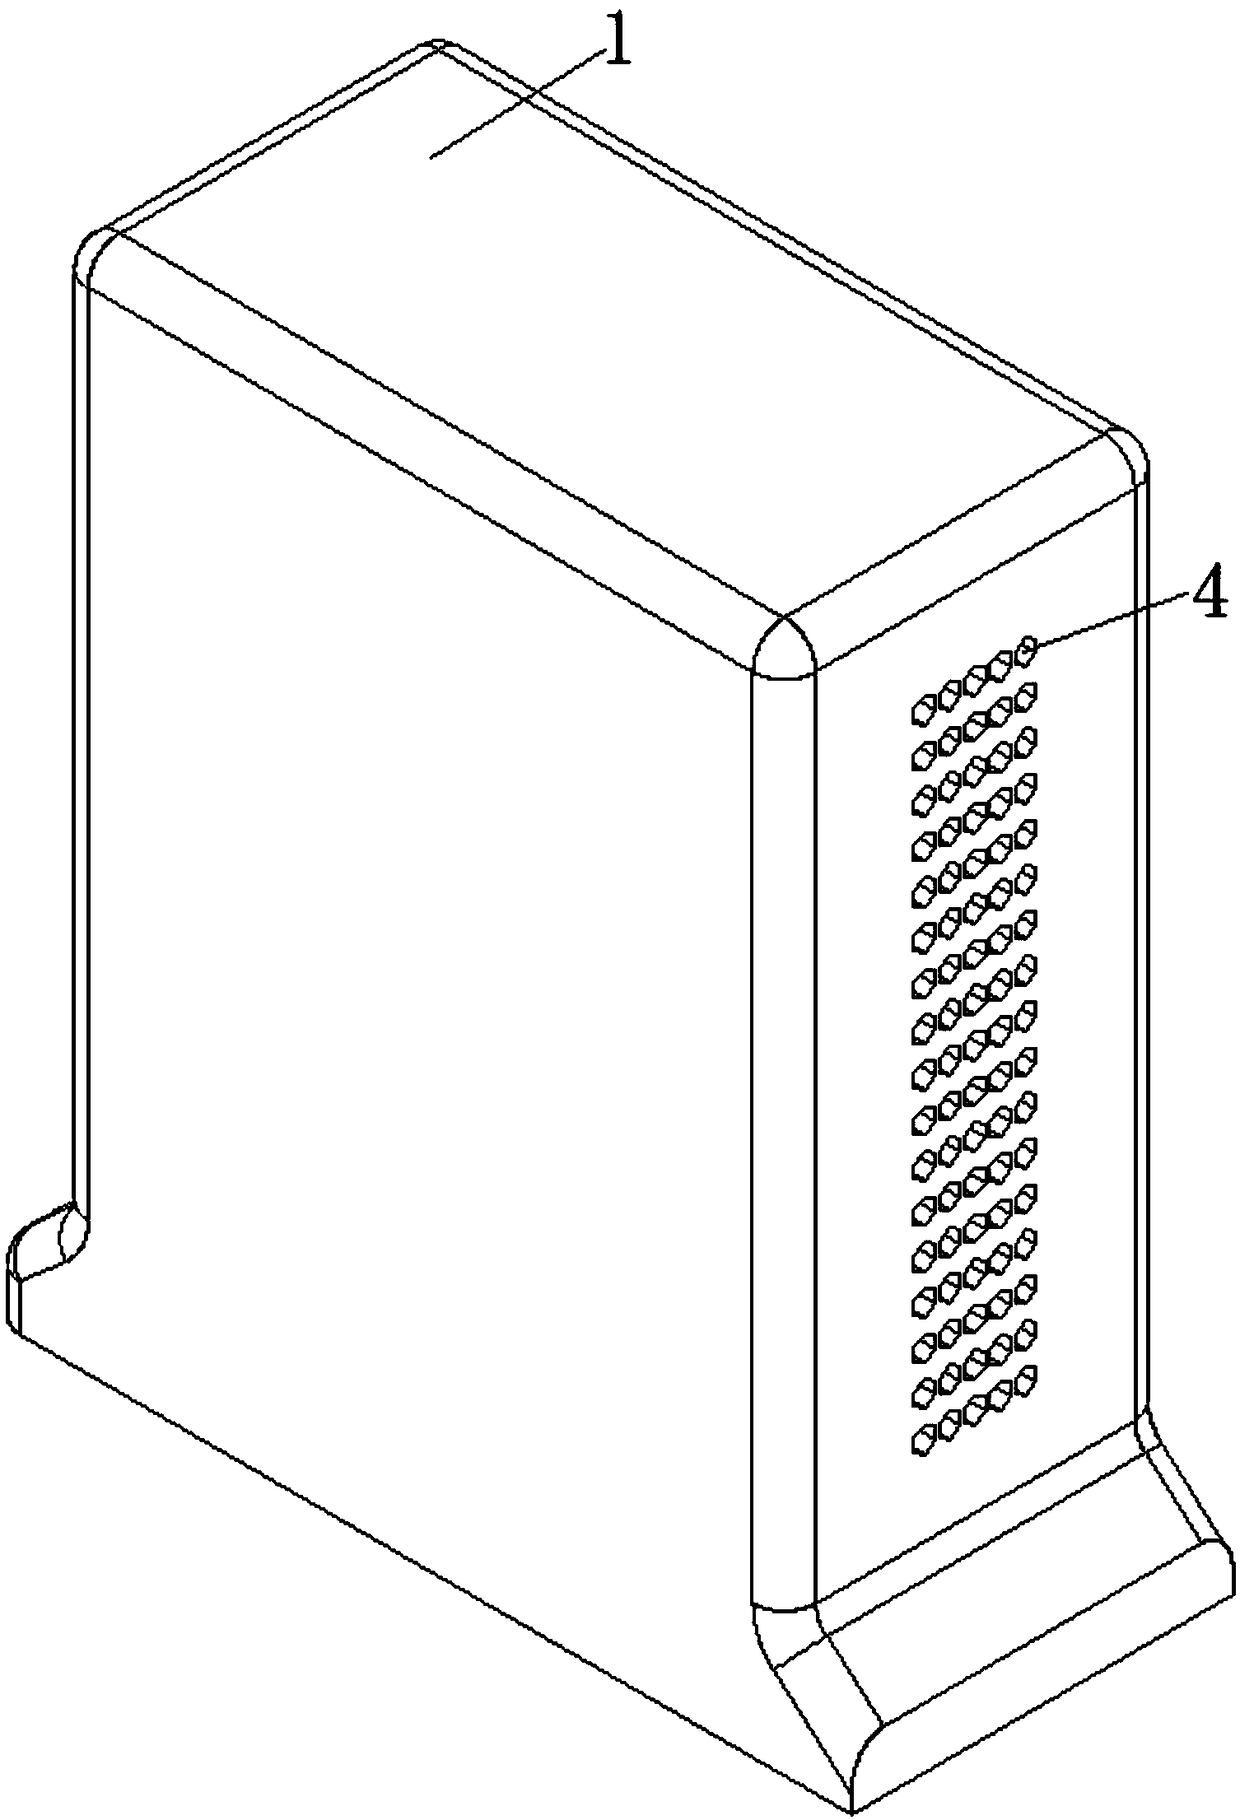 Disturbed flow type bidirectional ventilated water-cooled computer case